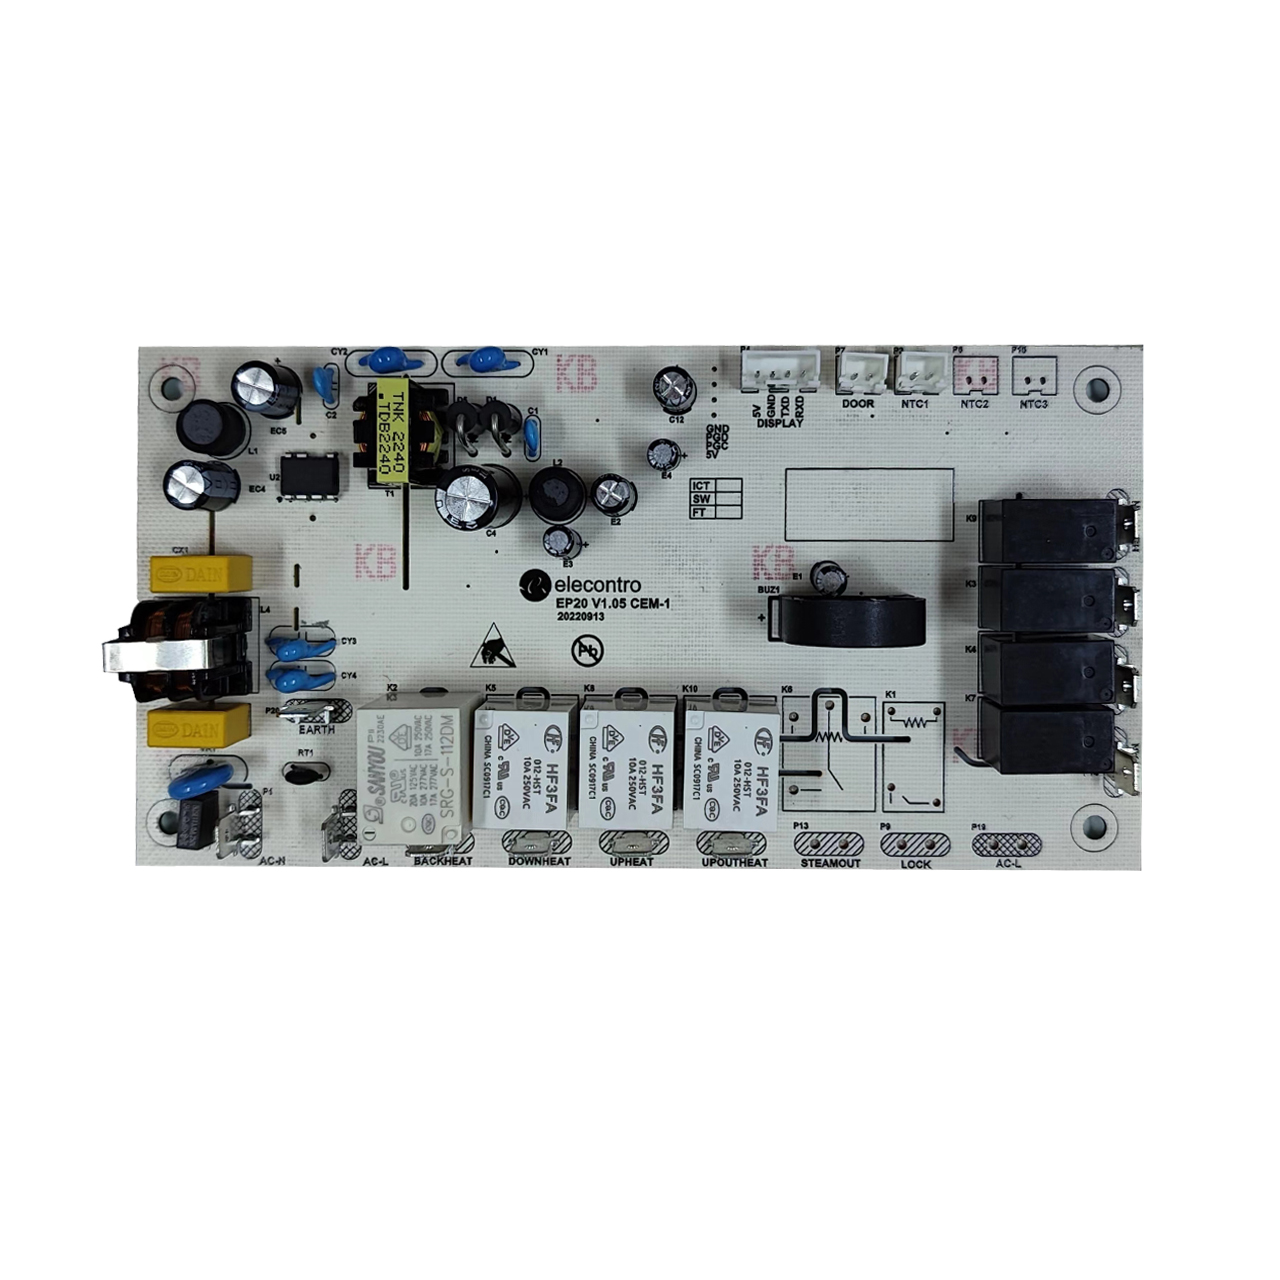 EM17 Built-in Oven Control Board